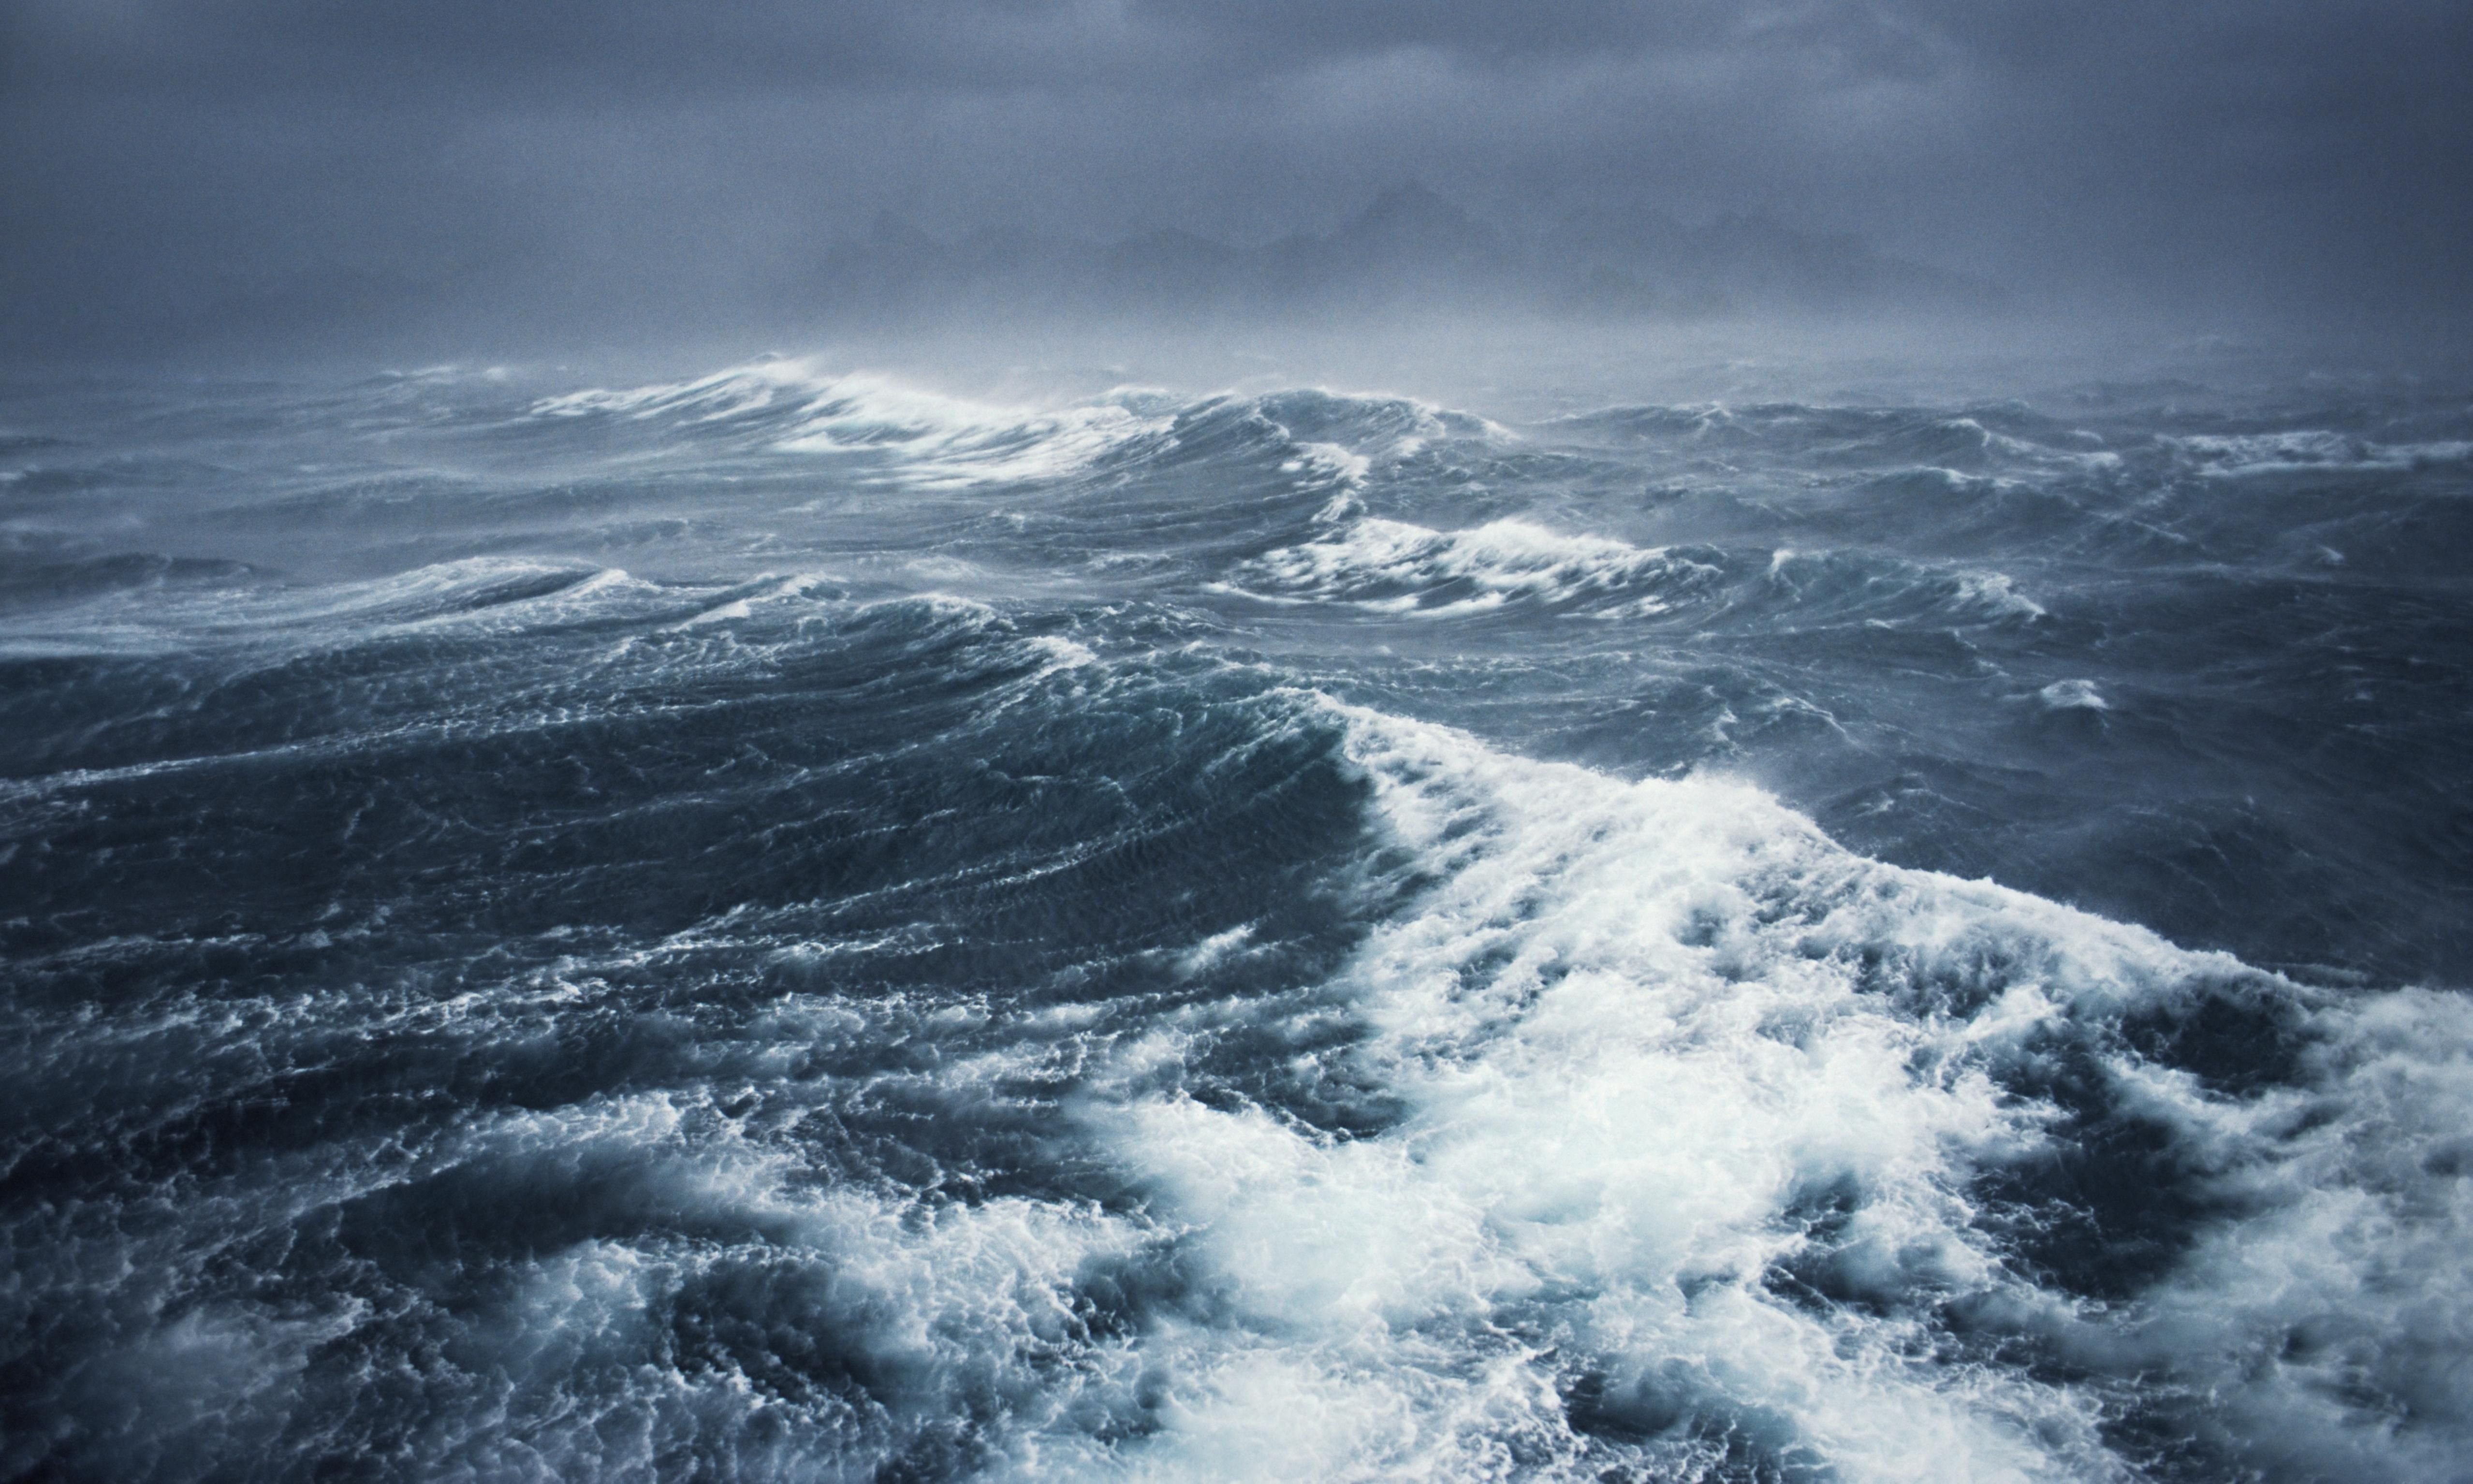 During storm. Берингово море шторм. Северный Ледовитый океан што. Атлантический океан шторм. Северный Ледовитый океан шторм.